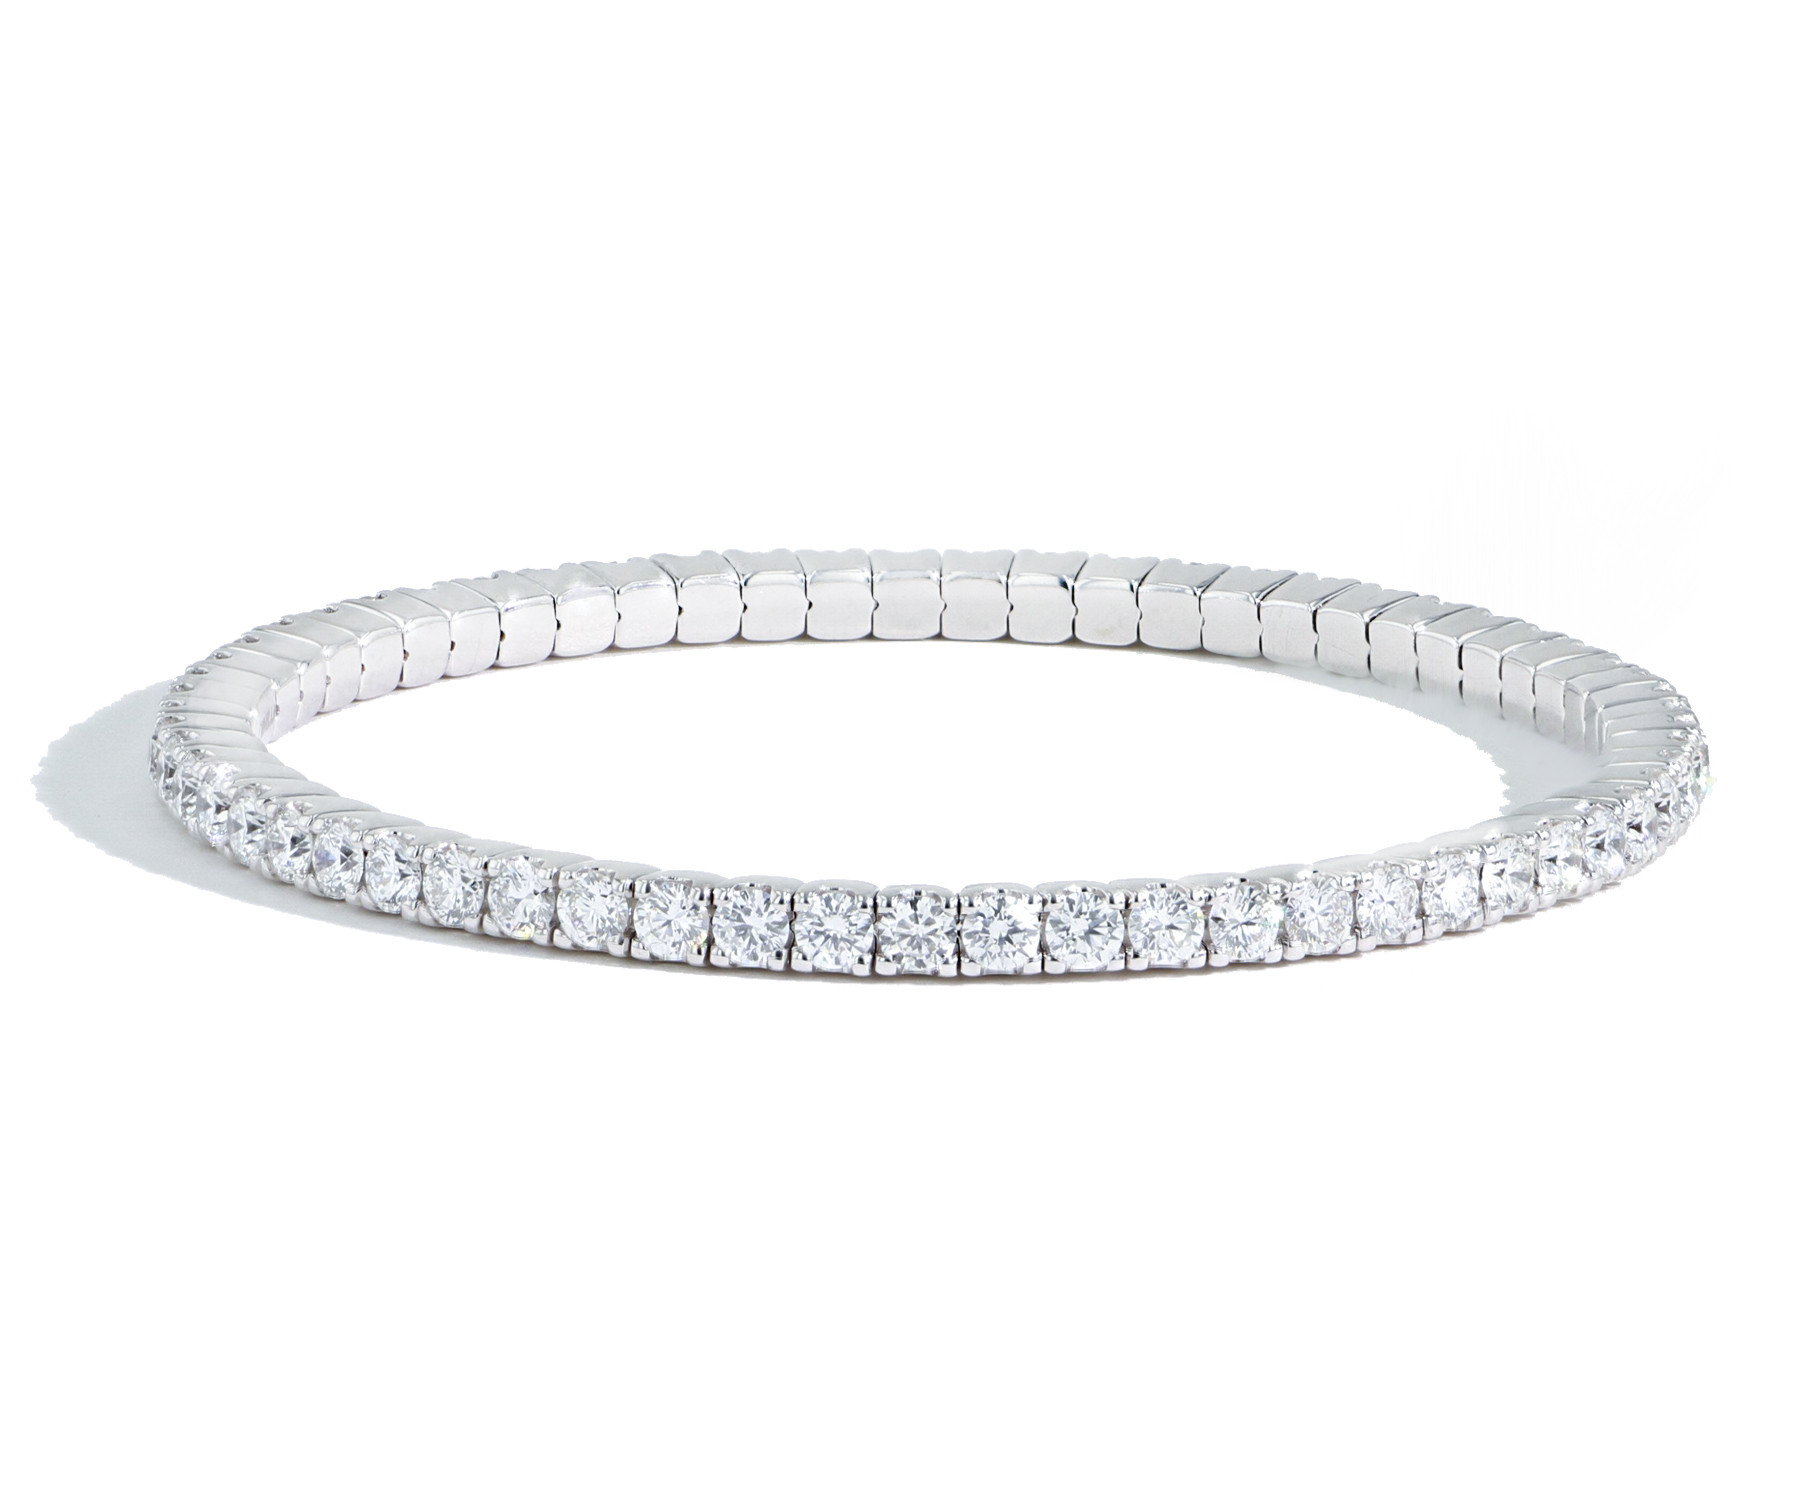 Buy quality Frumoasa diamond bracelet with flexible adjustable chain in Pune